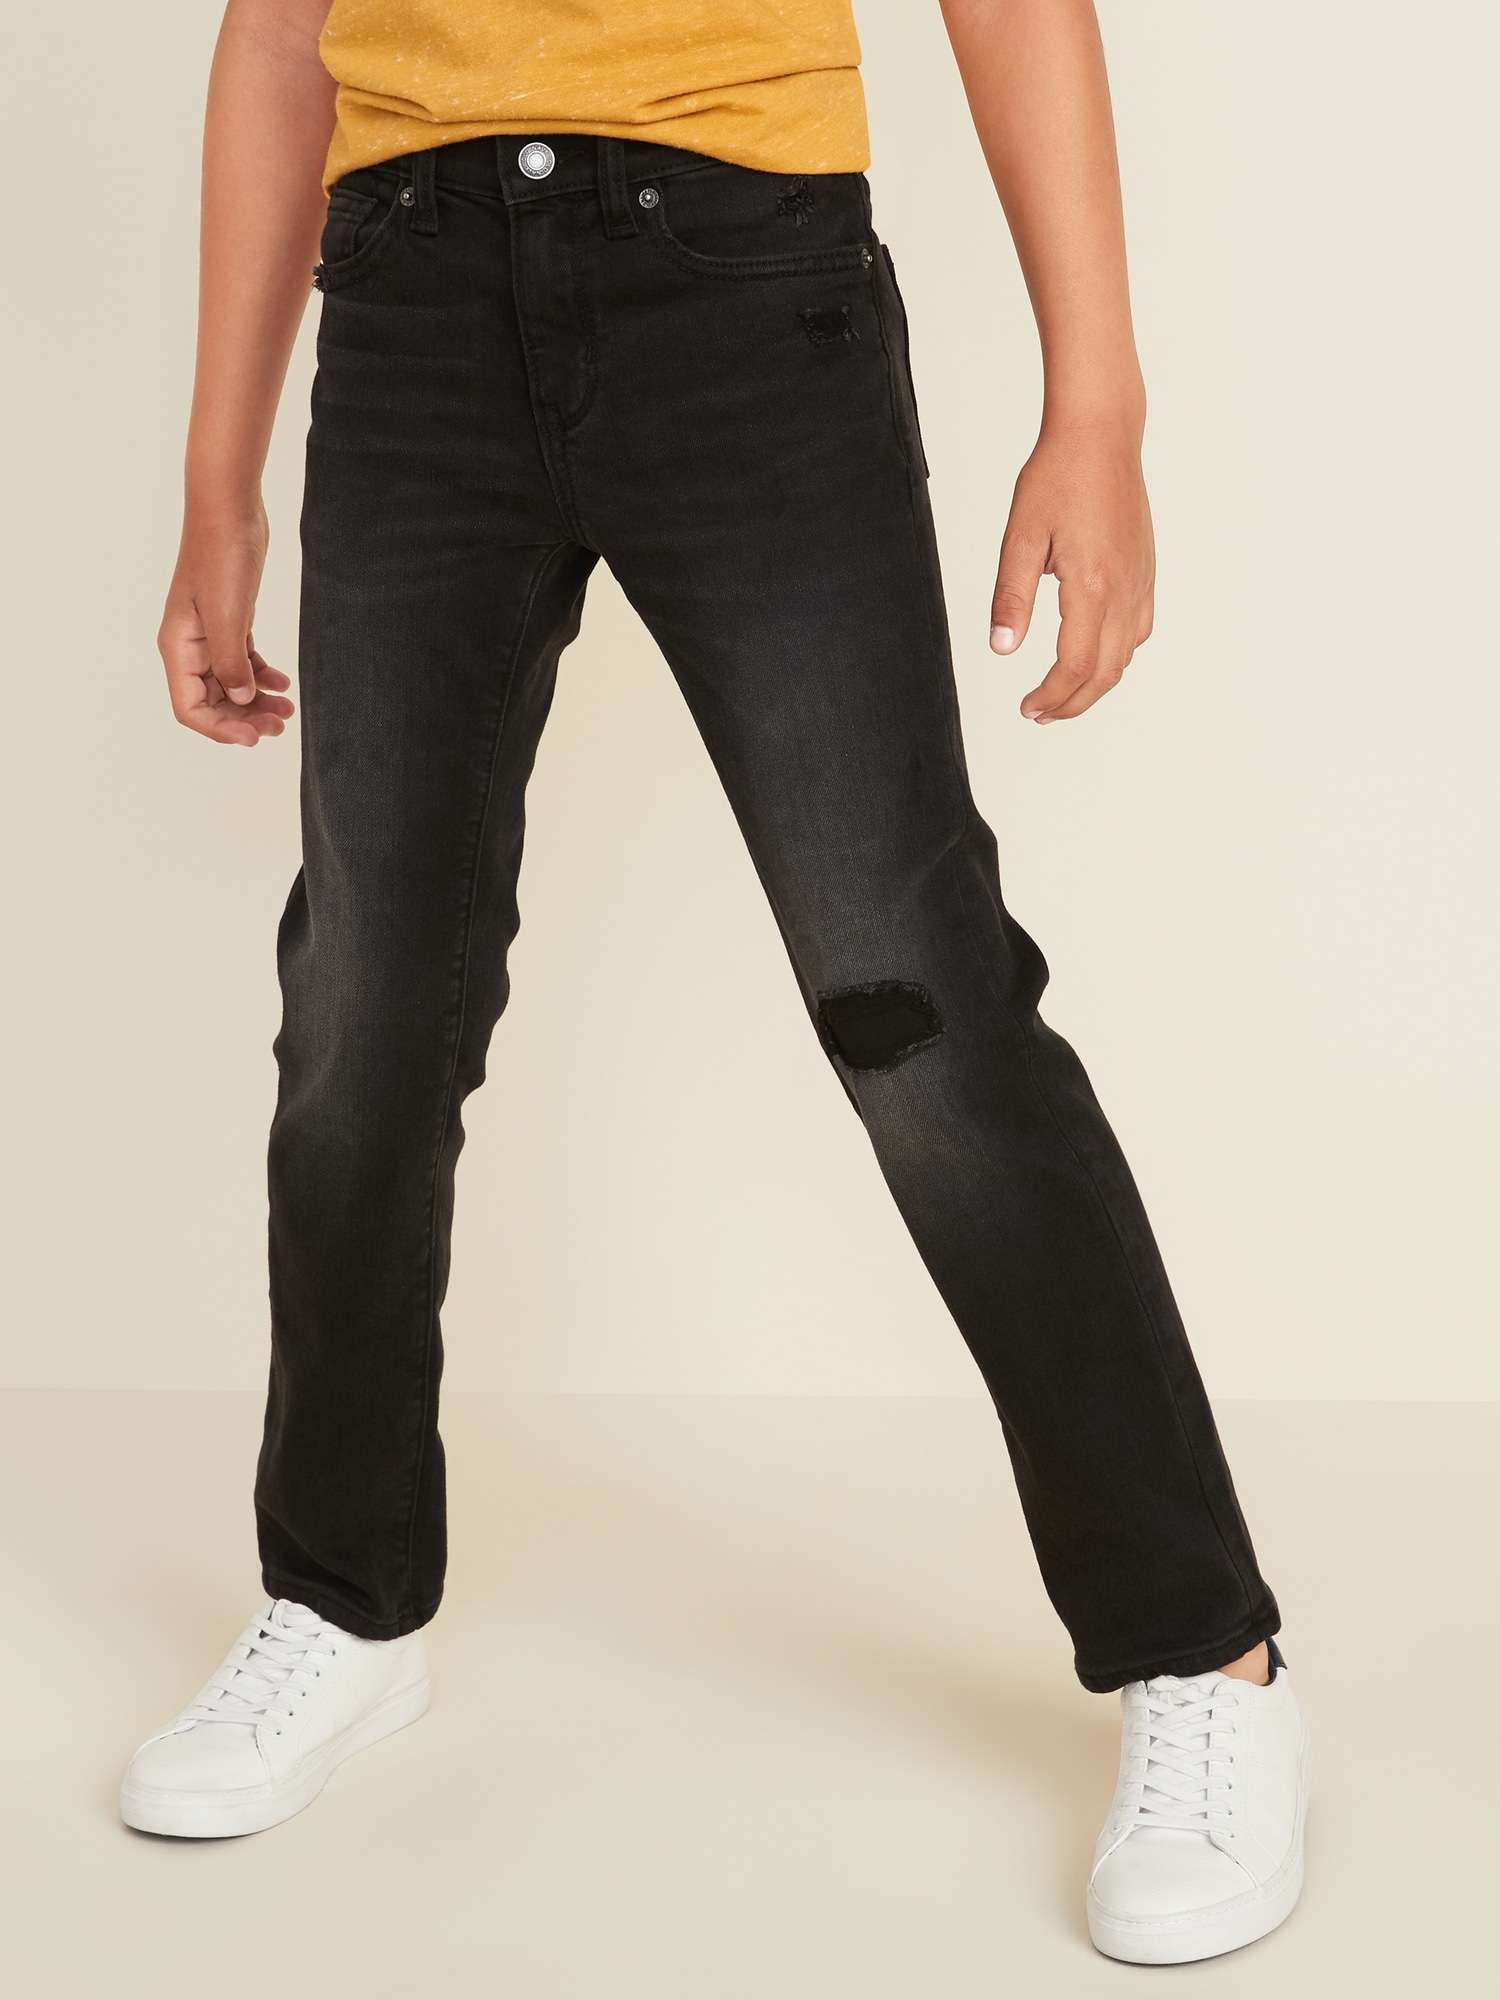 black stretchy jeans